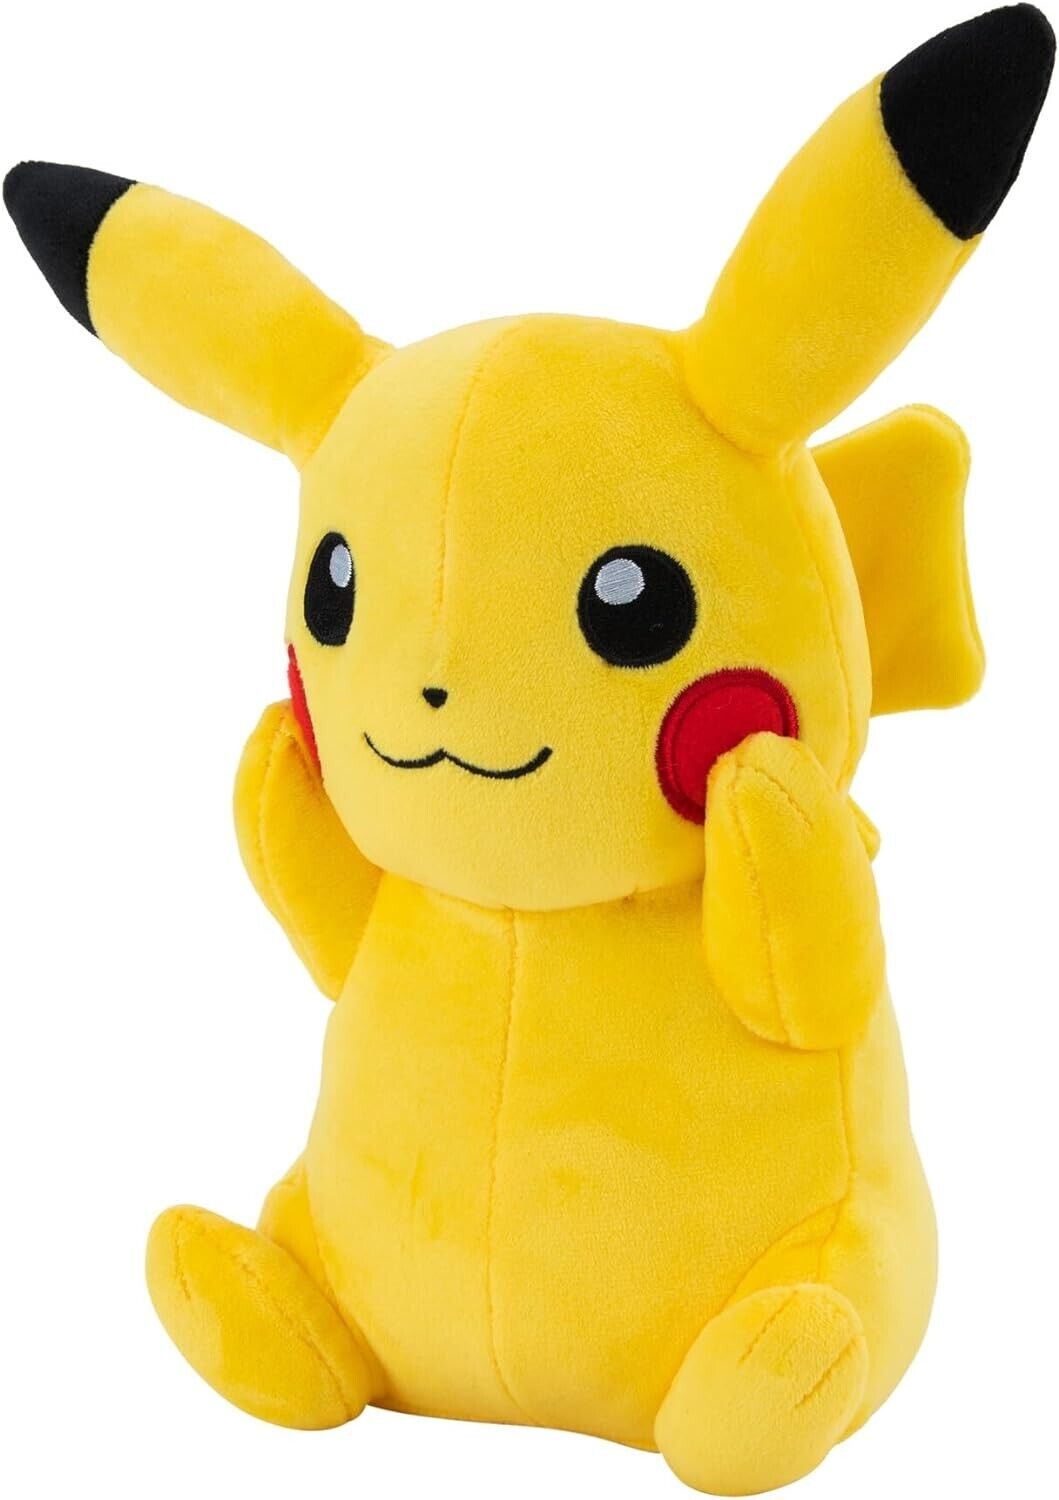 Pokémon Official and Premium Quality 8-inch Pikachu Plush - Adorable, Ultra-Soft